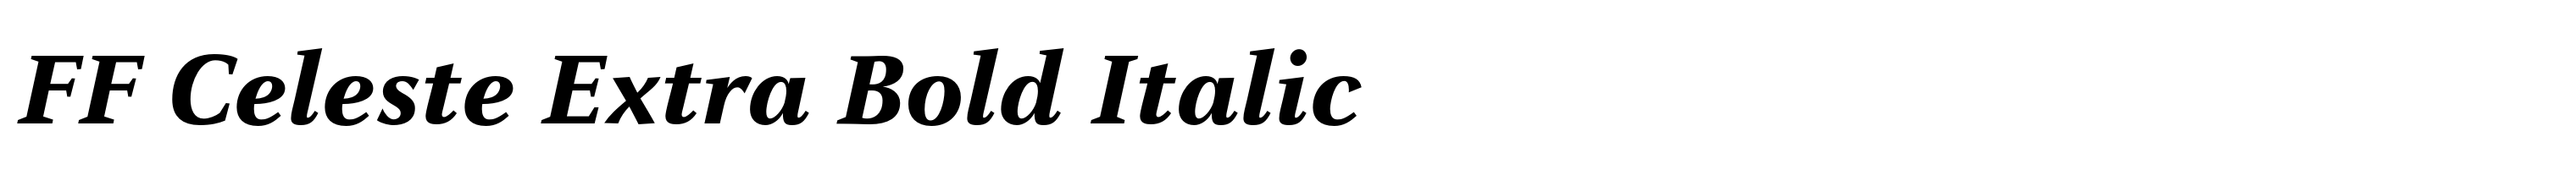 FF Celeste Extra Bold Italic